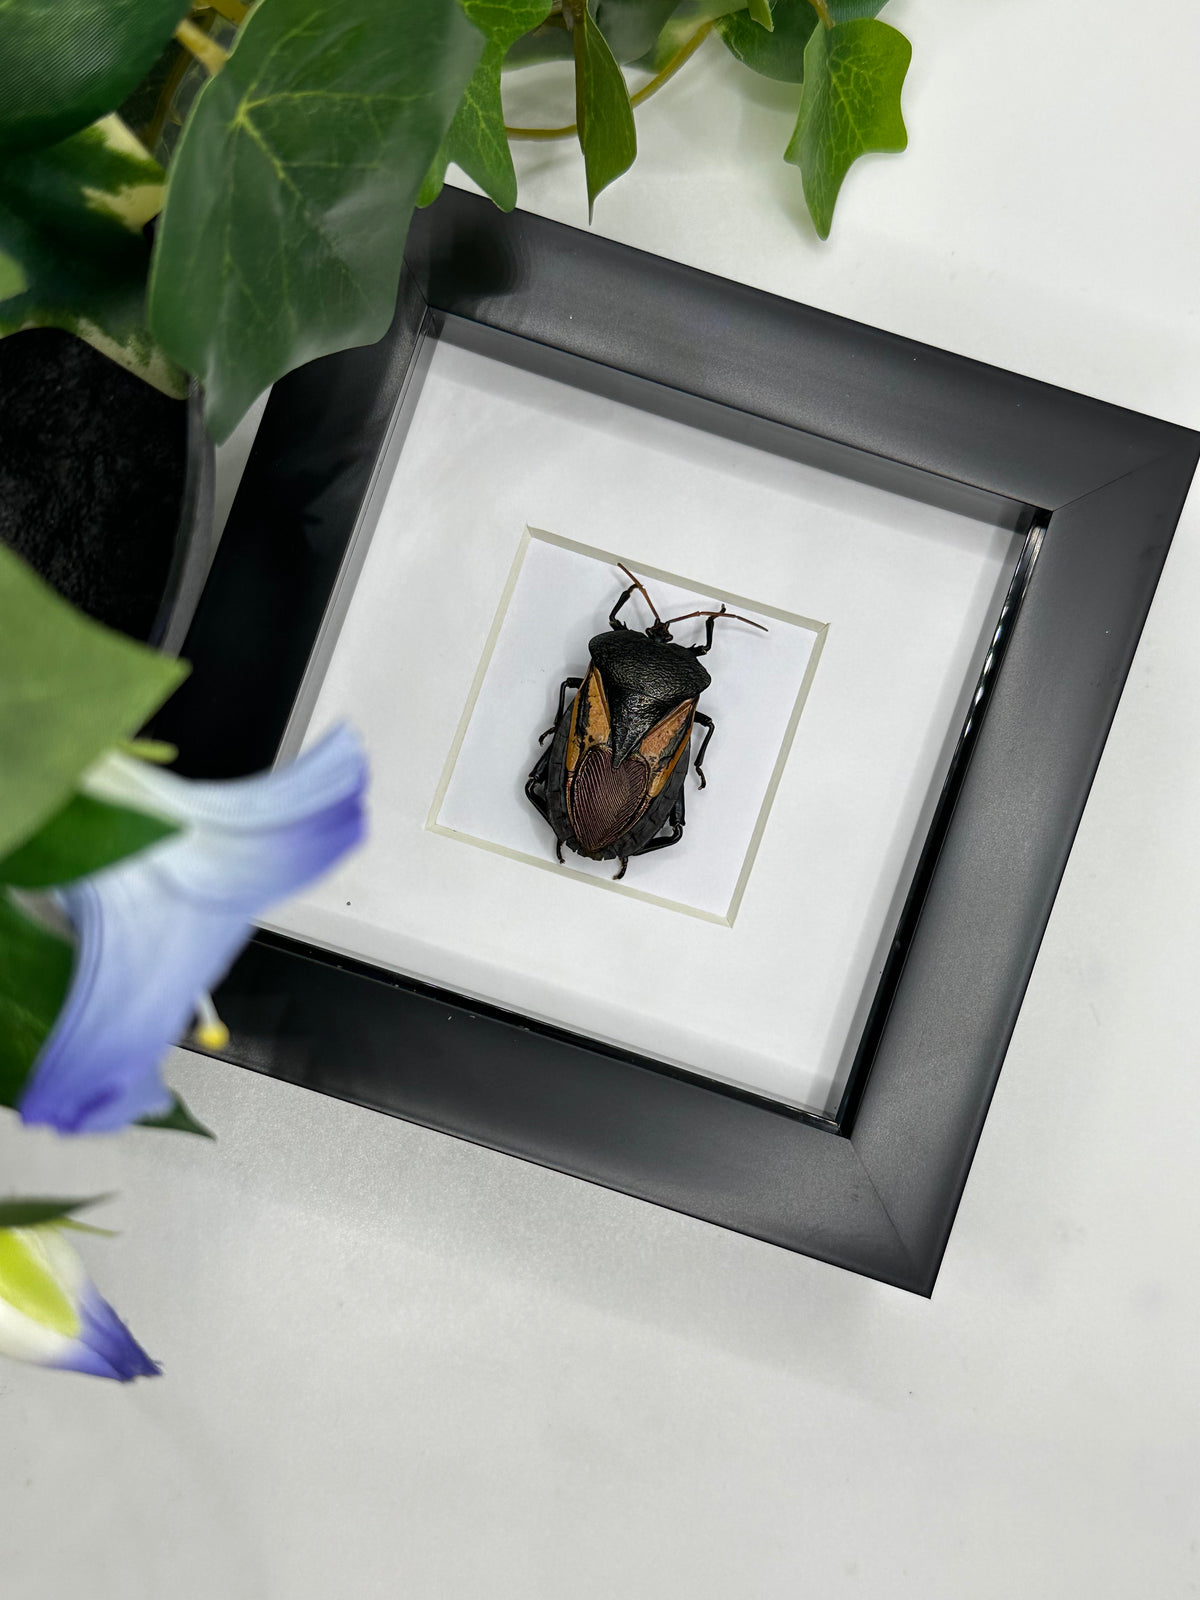 Shield Stink Bug / Oncomeris Flavicornis in a frame